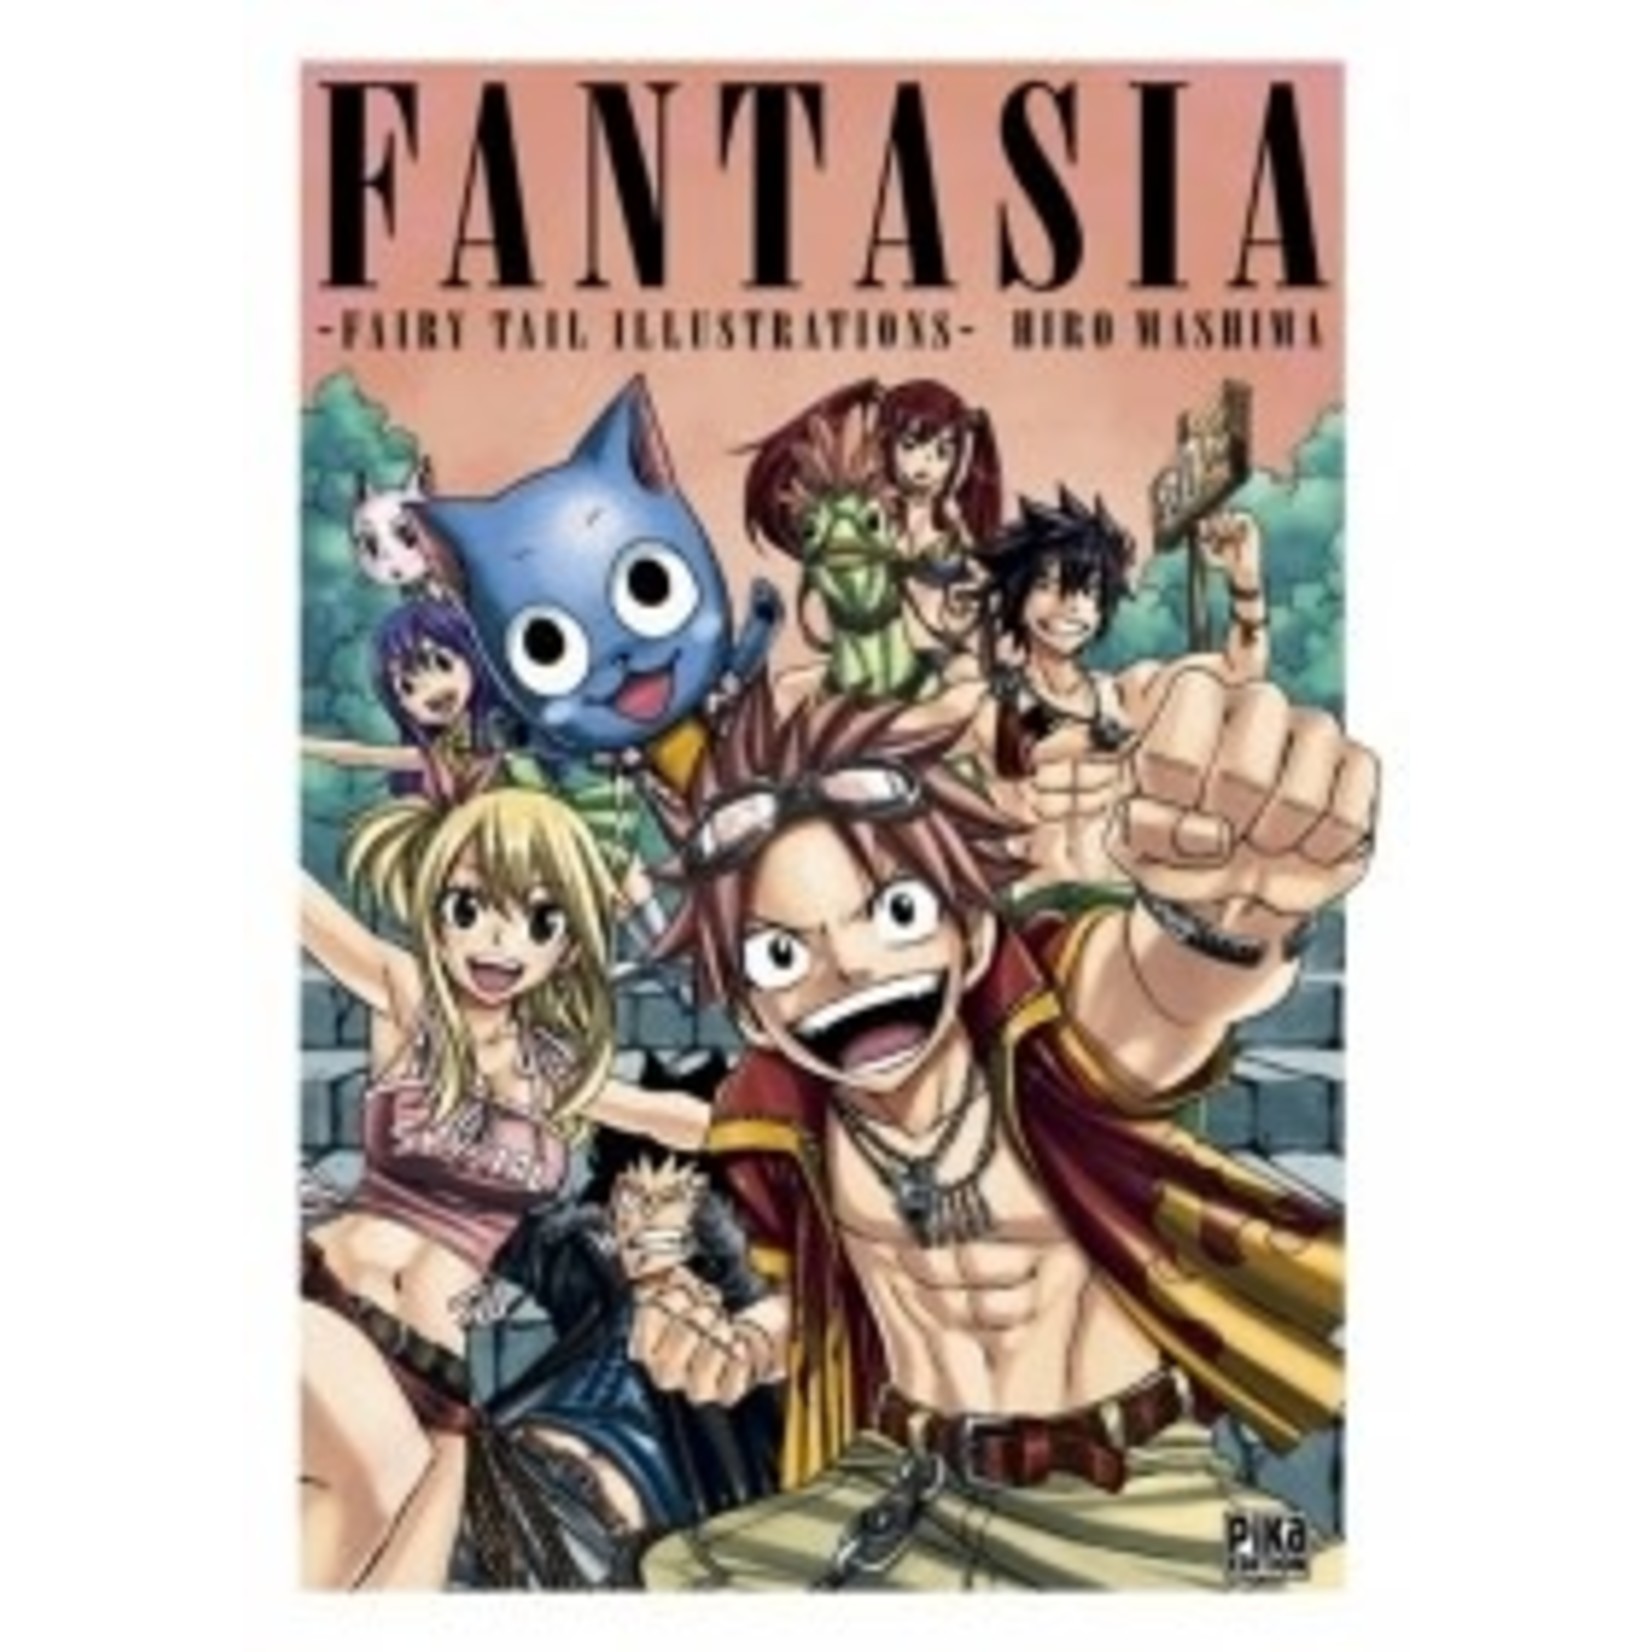 Pika Fairy Tail Artbook - Fantasia